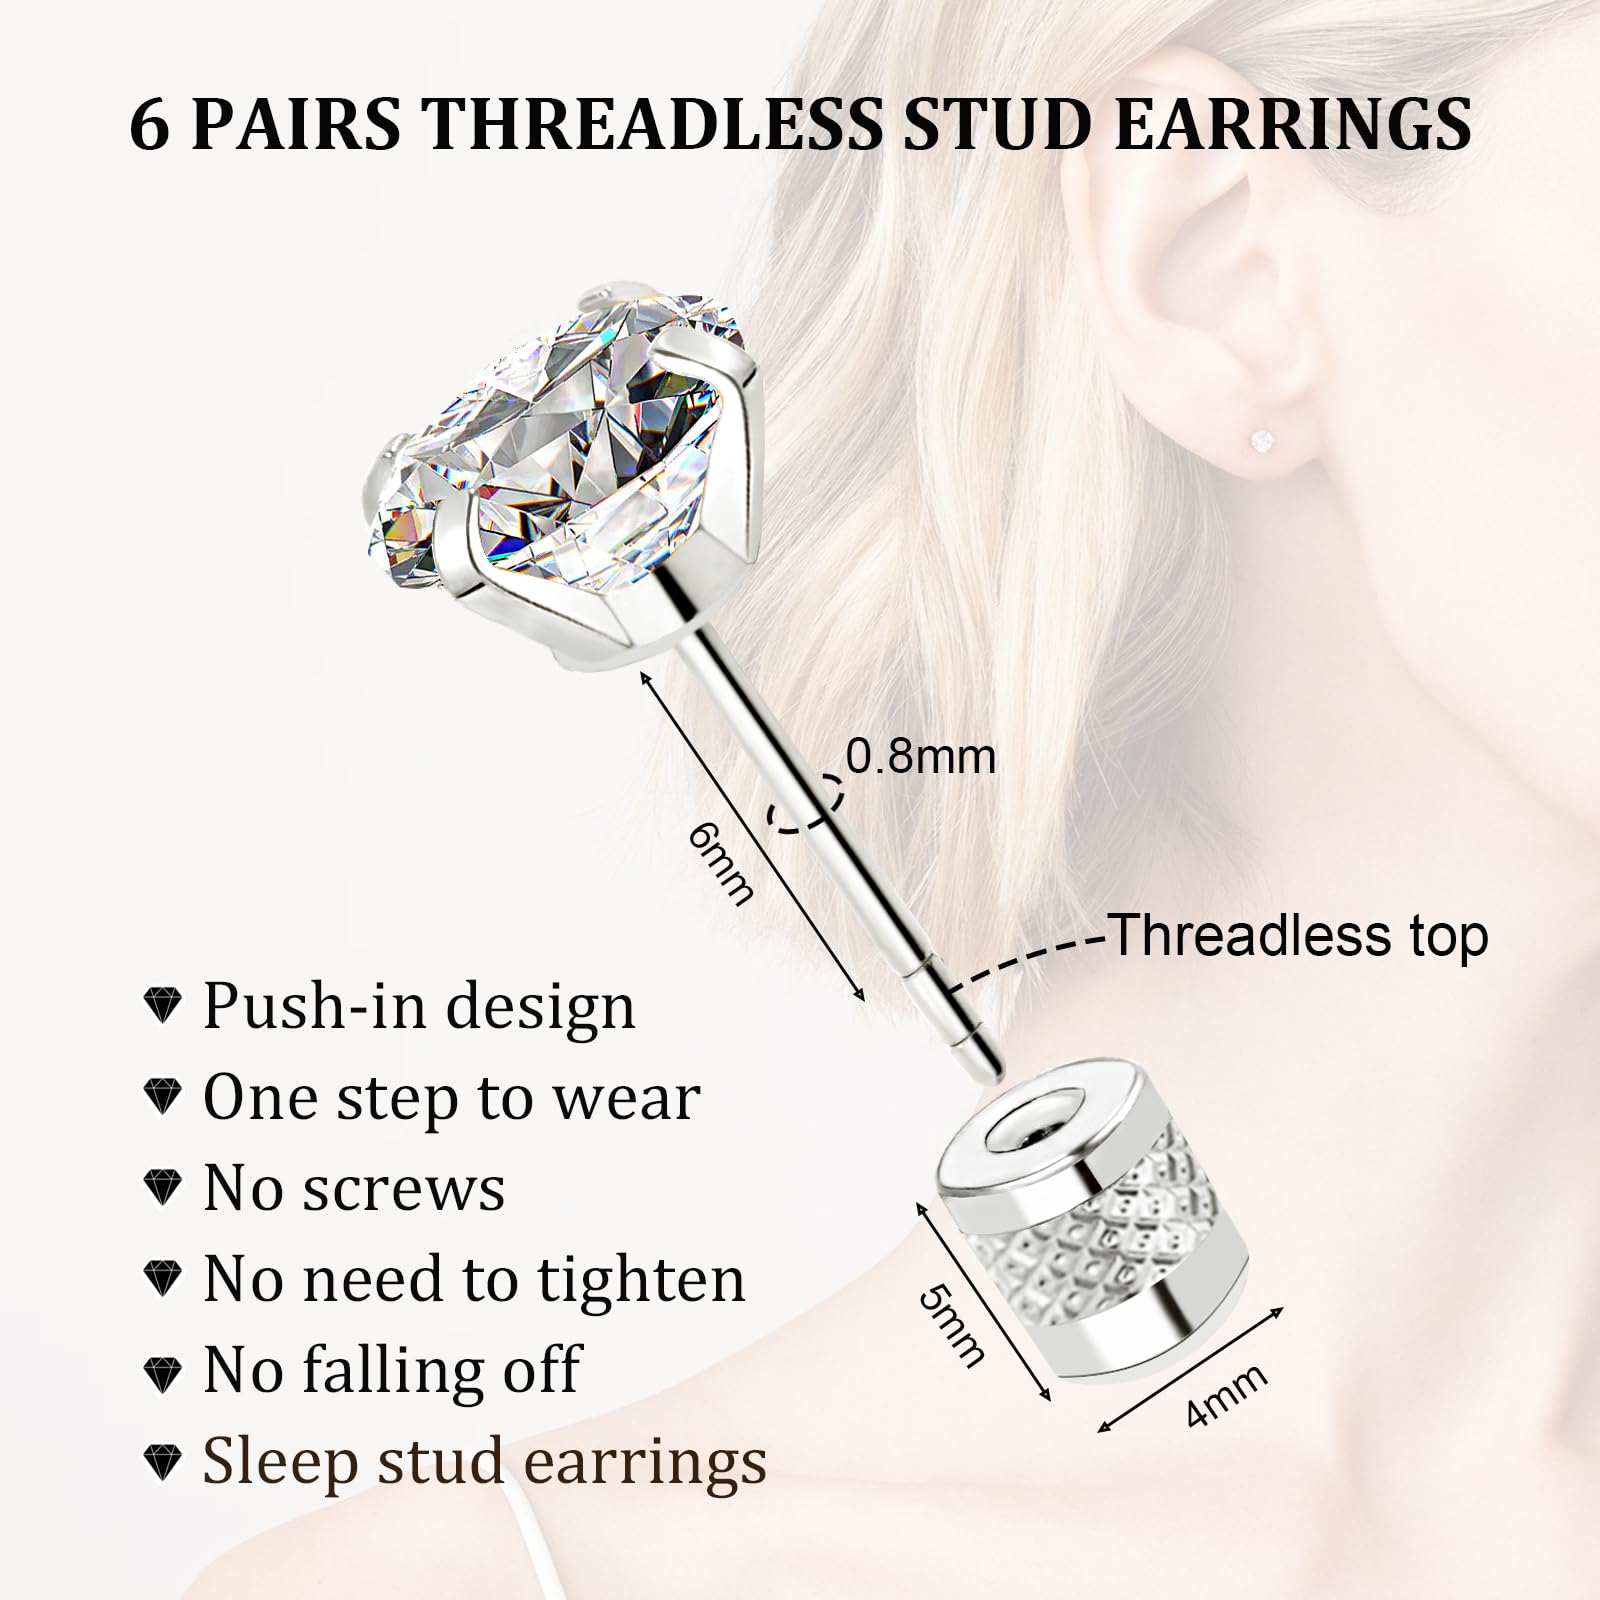 Threadless Flat Back Stud Earrings, 6 Pairs Titanium Hypoallergenic Earrings for Women Men, Cubic Zirconia Silver Gold Stud Earrings Surgical Stainless Steel Stud Earrings Set for Cartilage 2-8mm,